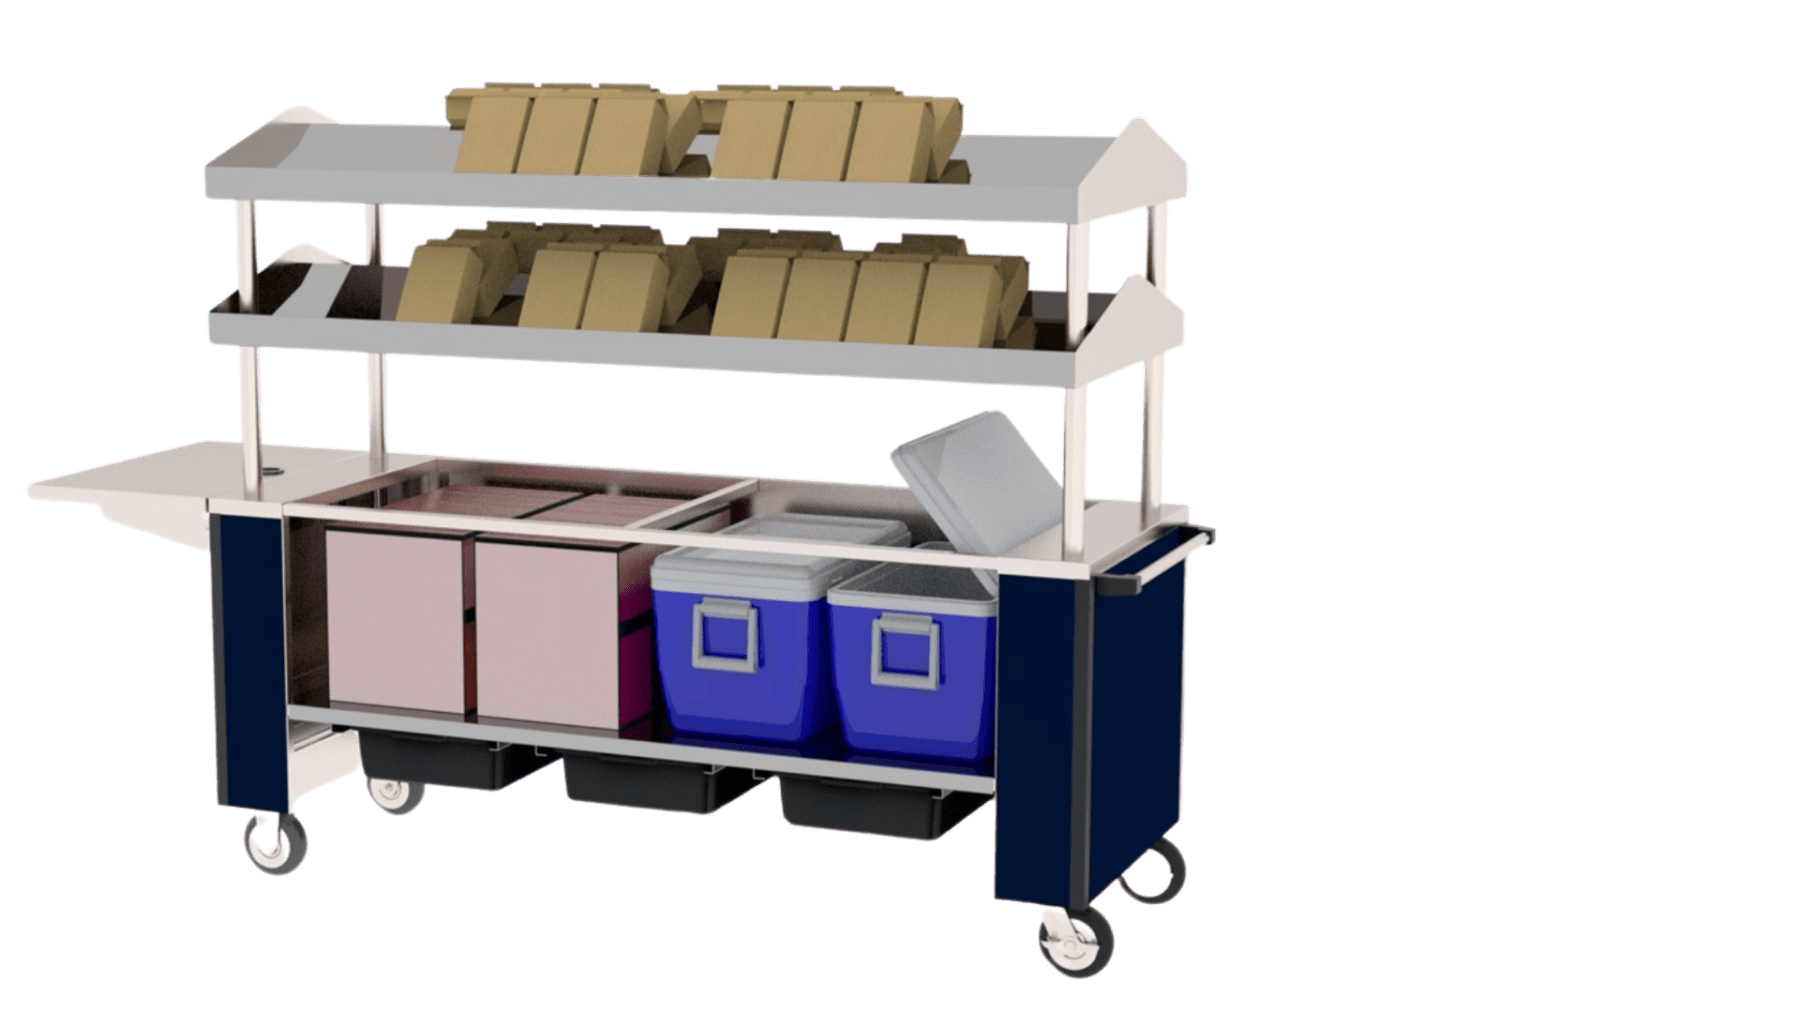 Lakeside 58080 Mobile Housekeeping Cart, (1) Blue Nylon Bag, (1) Door, (1)  18 x 48-in. Fold-Up Platform, (2) Bucket Capacity - Lakeside Foodservice